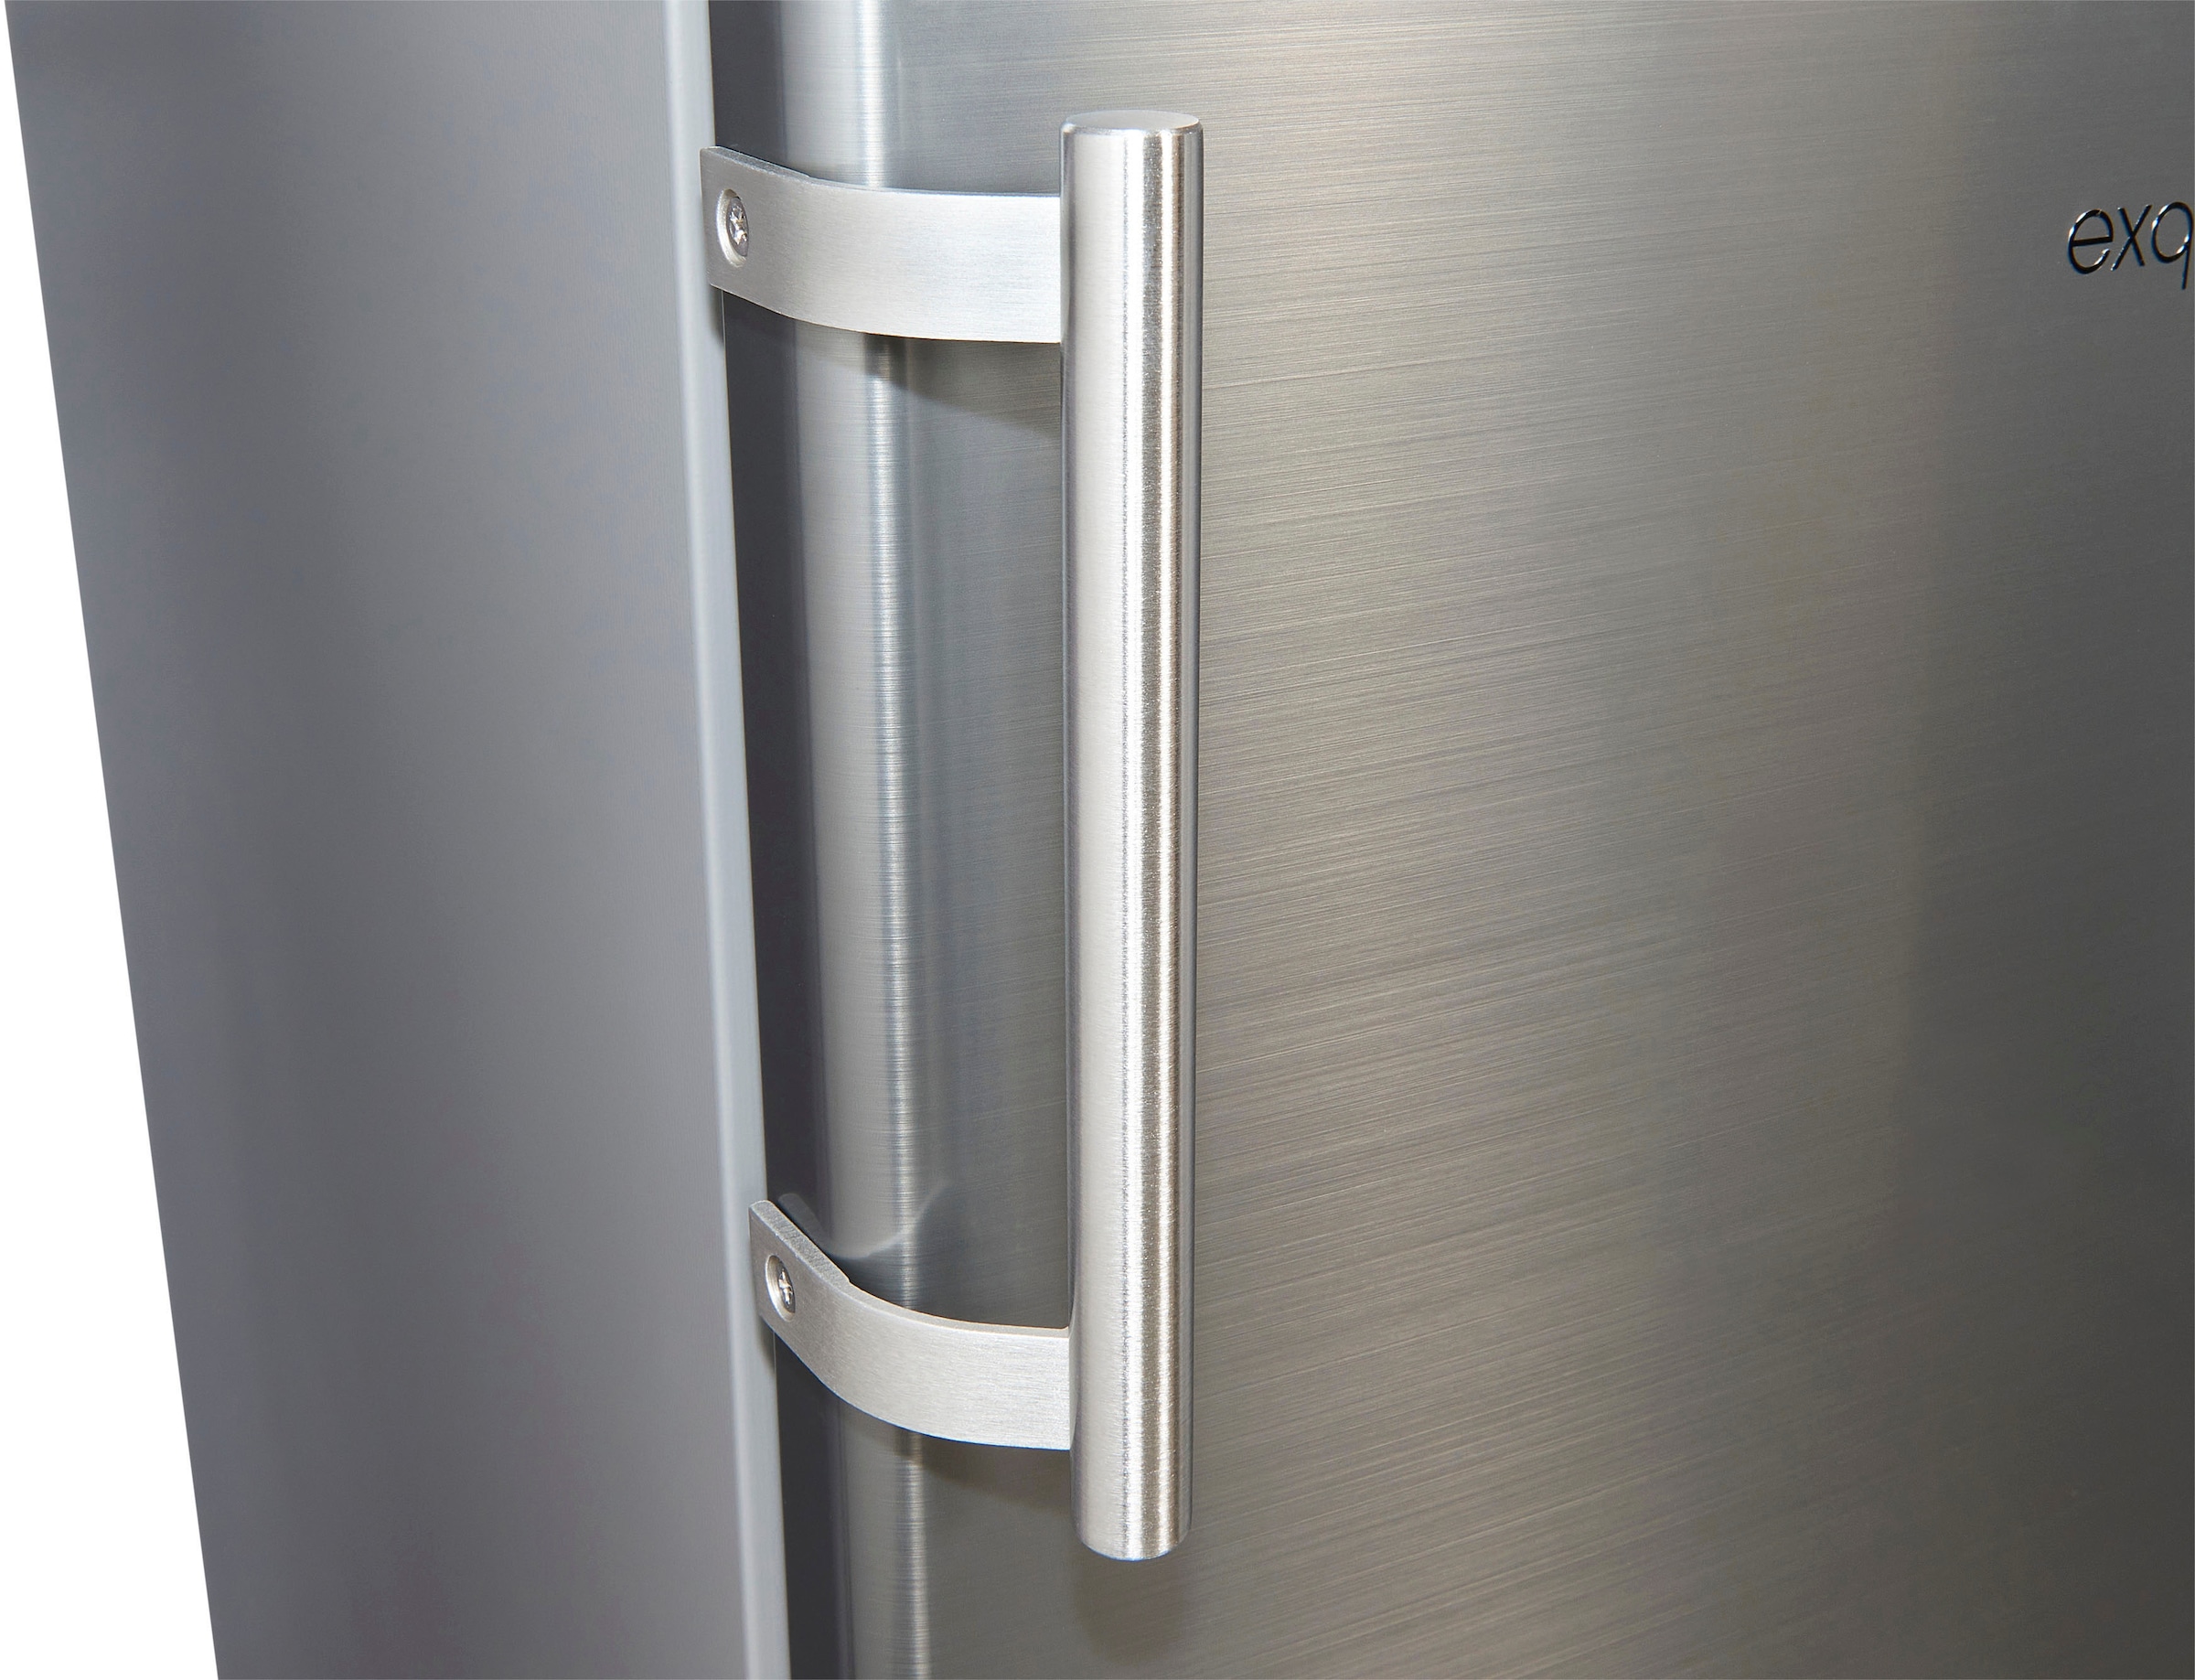 Kühlschrank exquisit jetzt 55 cm hoch, KS185-4-HE-040E 122 breit cm OTTO bei »KS185-4-HE-040E«, weiss, kaufen